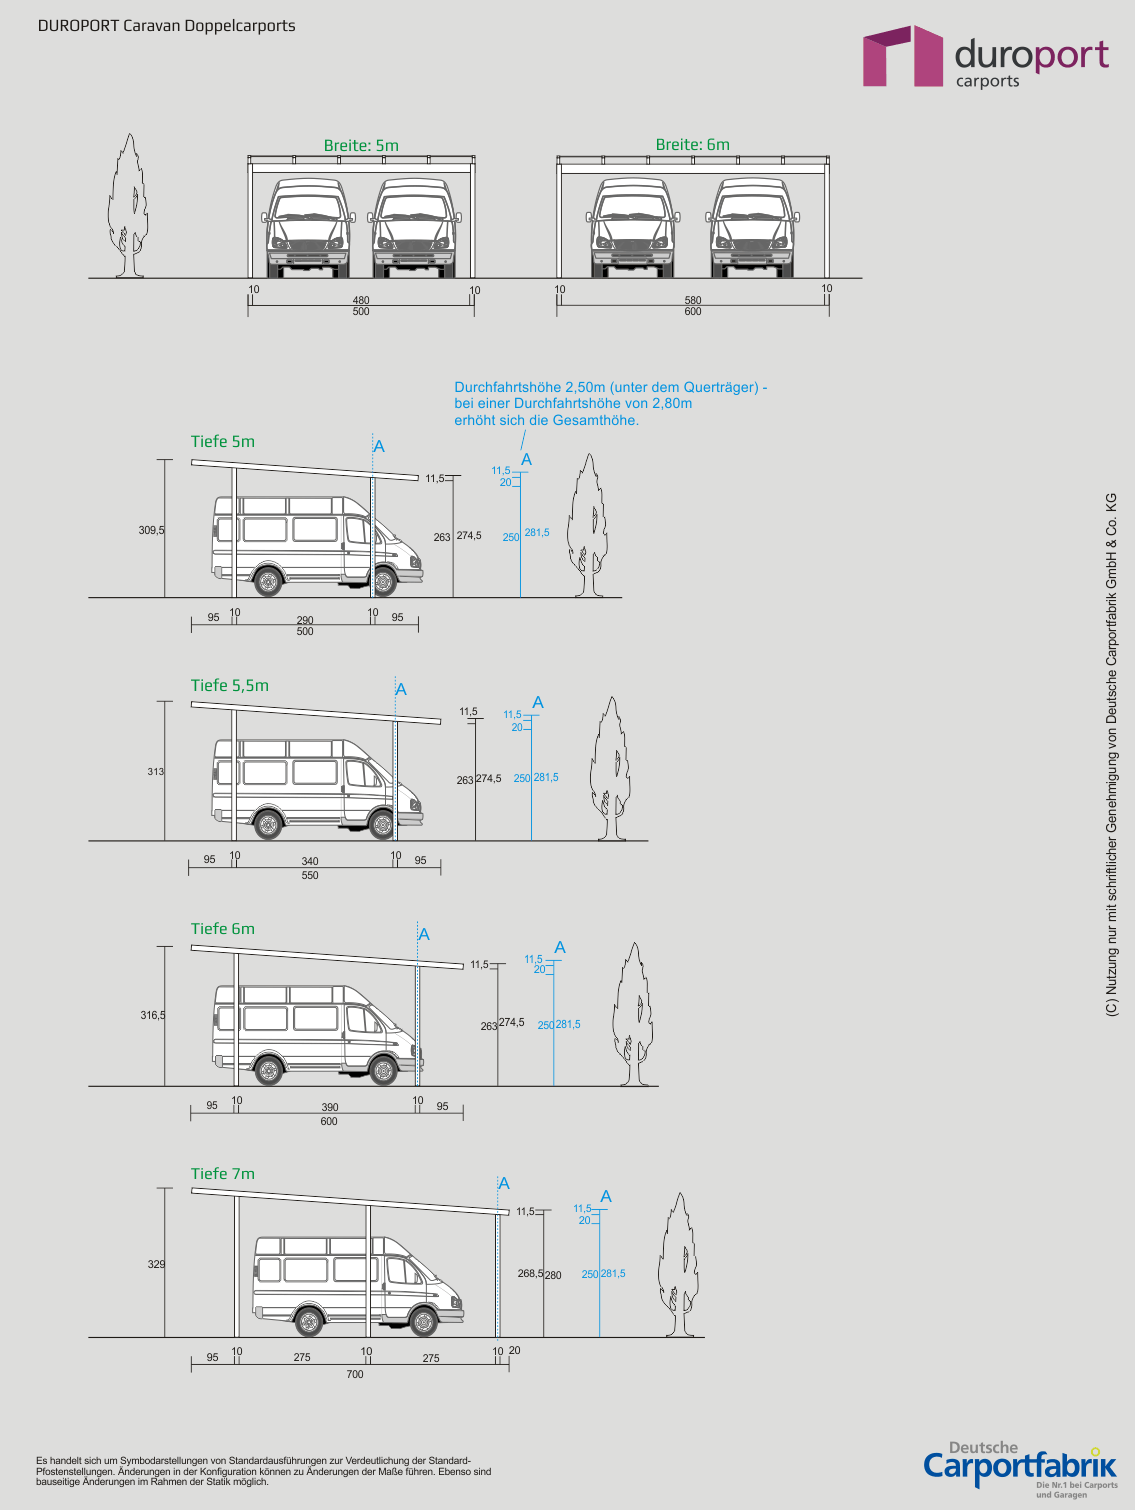 Technische Ansichten DUROPORT Caravan Doppelcarport